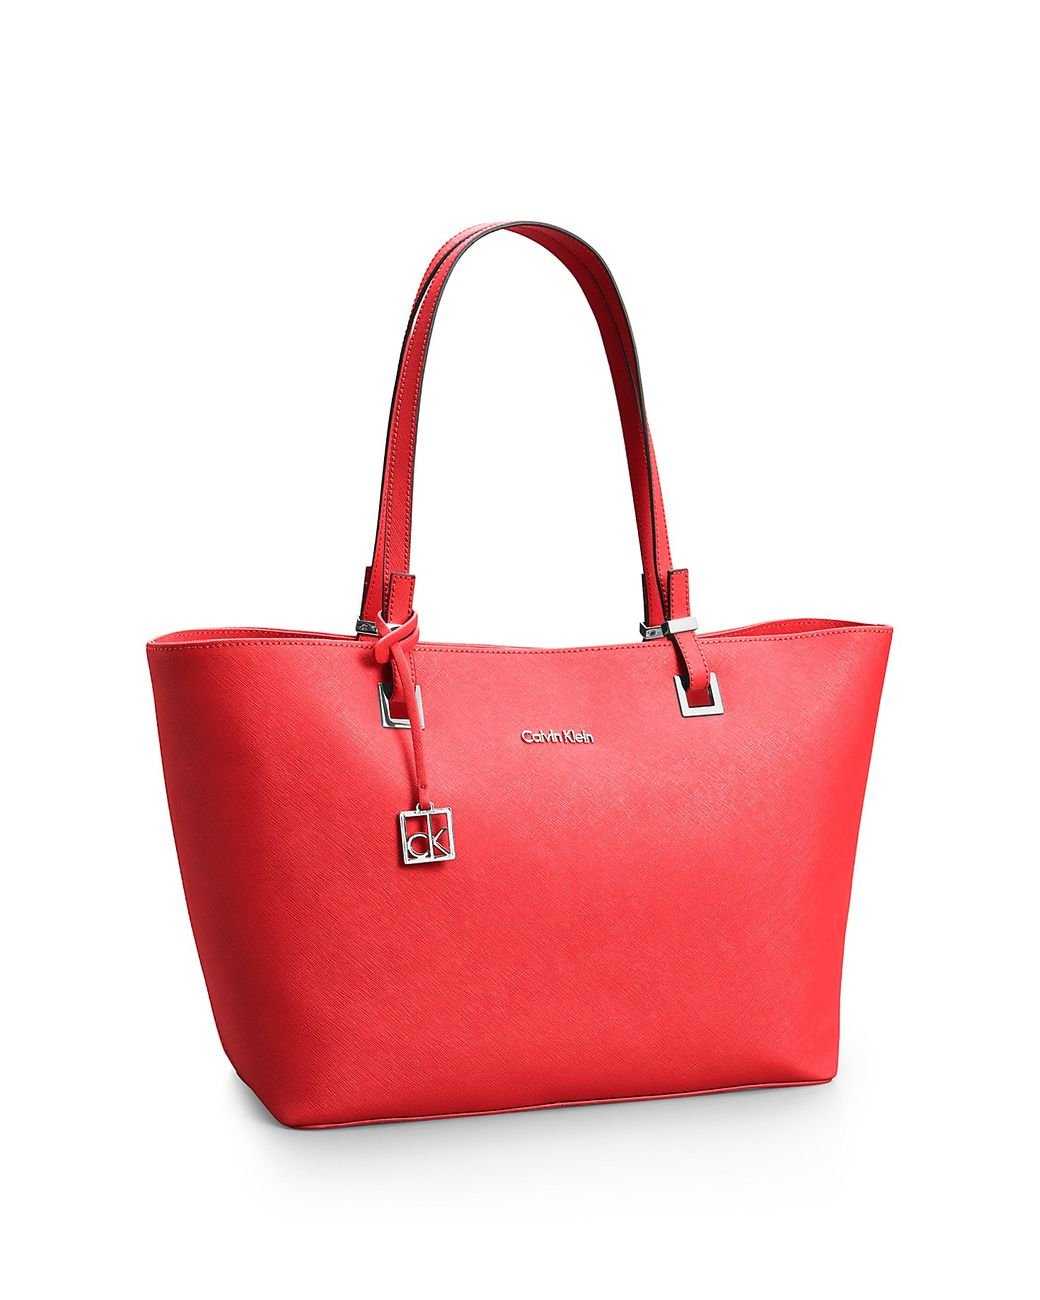 Kloppen melk Discriminatie Calvin Klein Scarlett Saffiano Leather Shopper Tote in Red | Lyst